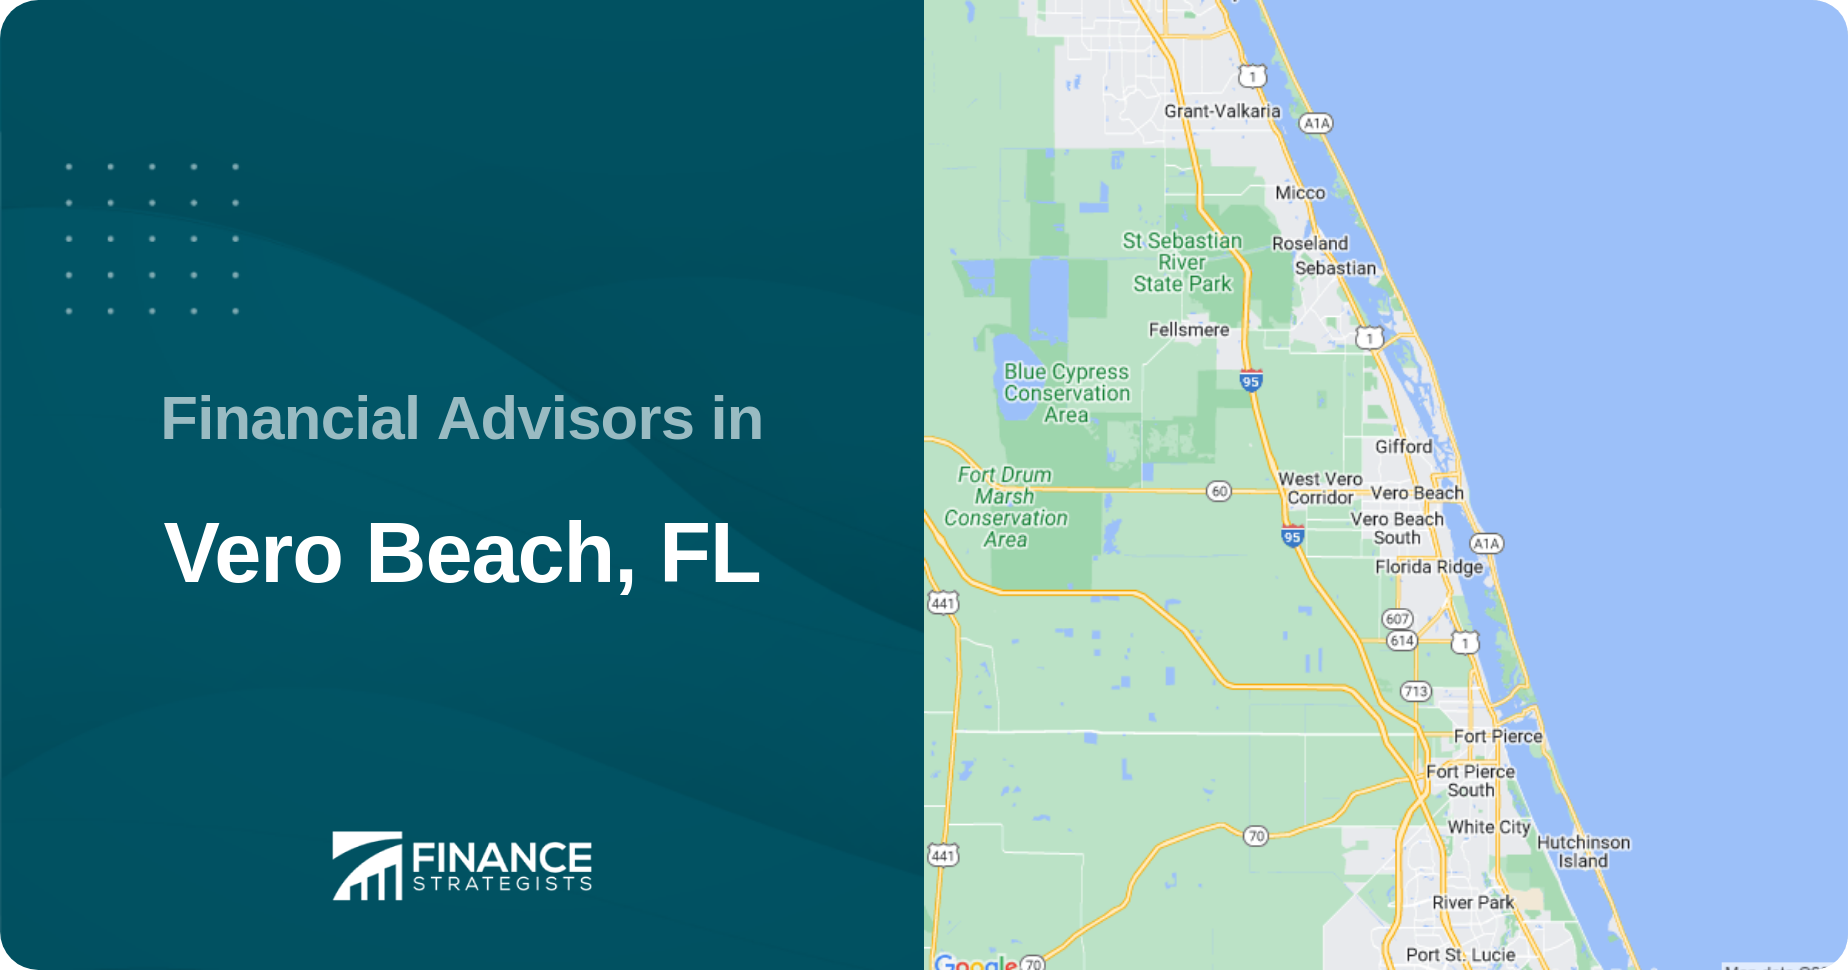 Financial Advisors in Vero Beach, FL